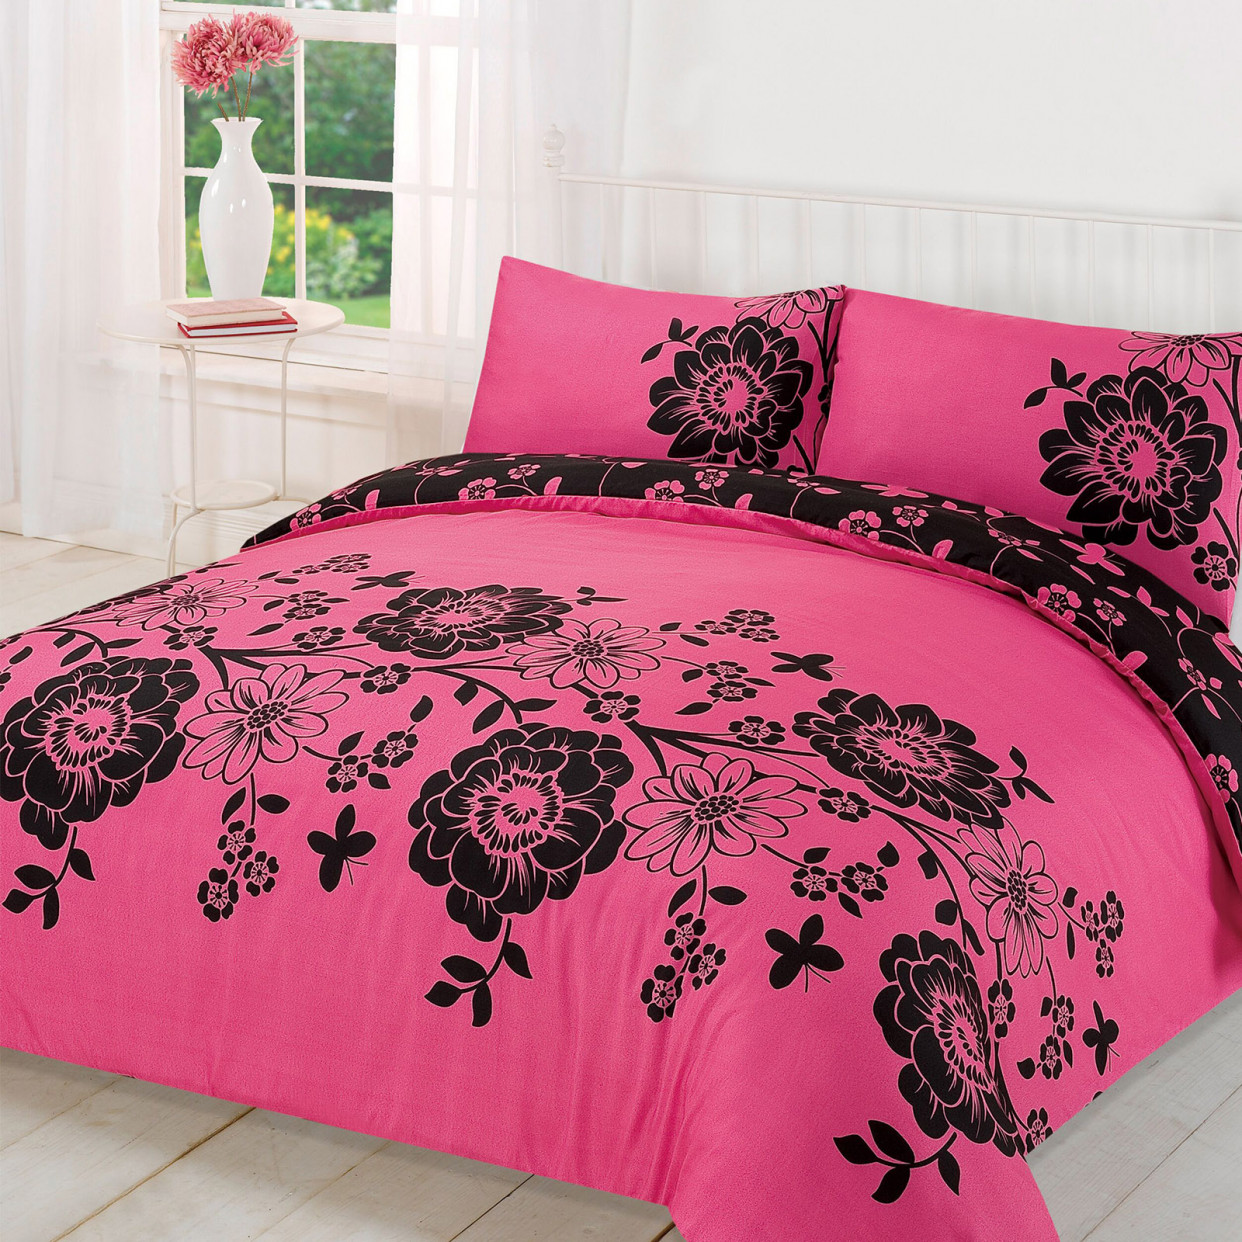 Roslyn Duvet Cover with pillowcase set - Pink/Black>